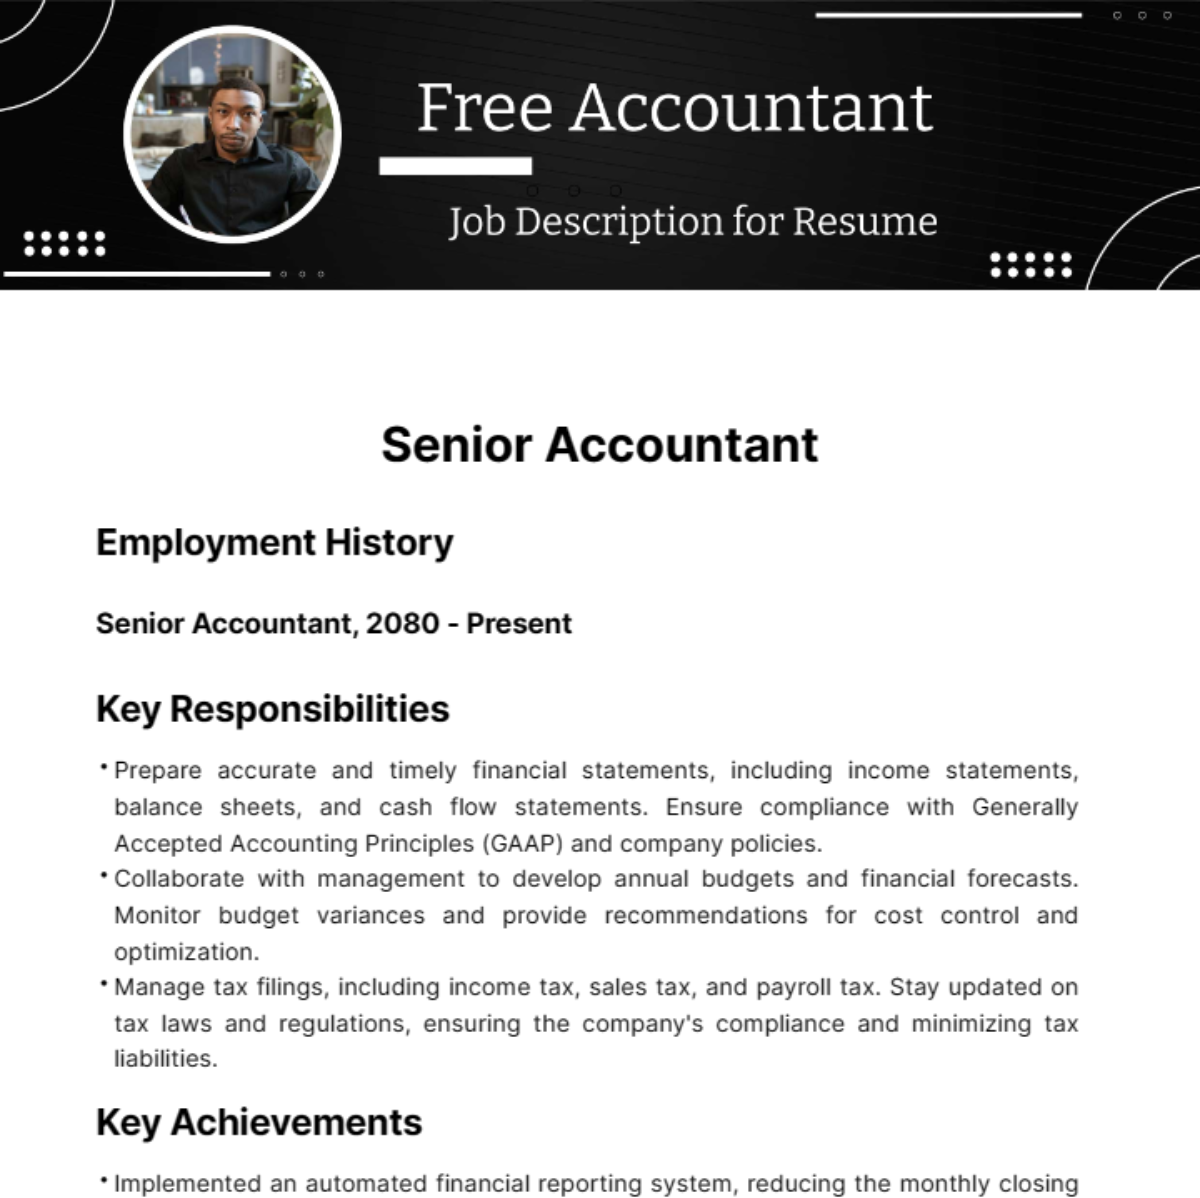 Free Accountant Job Description for Resume Template